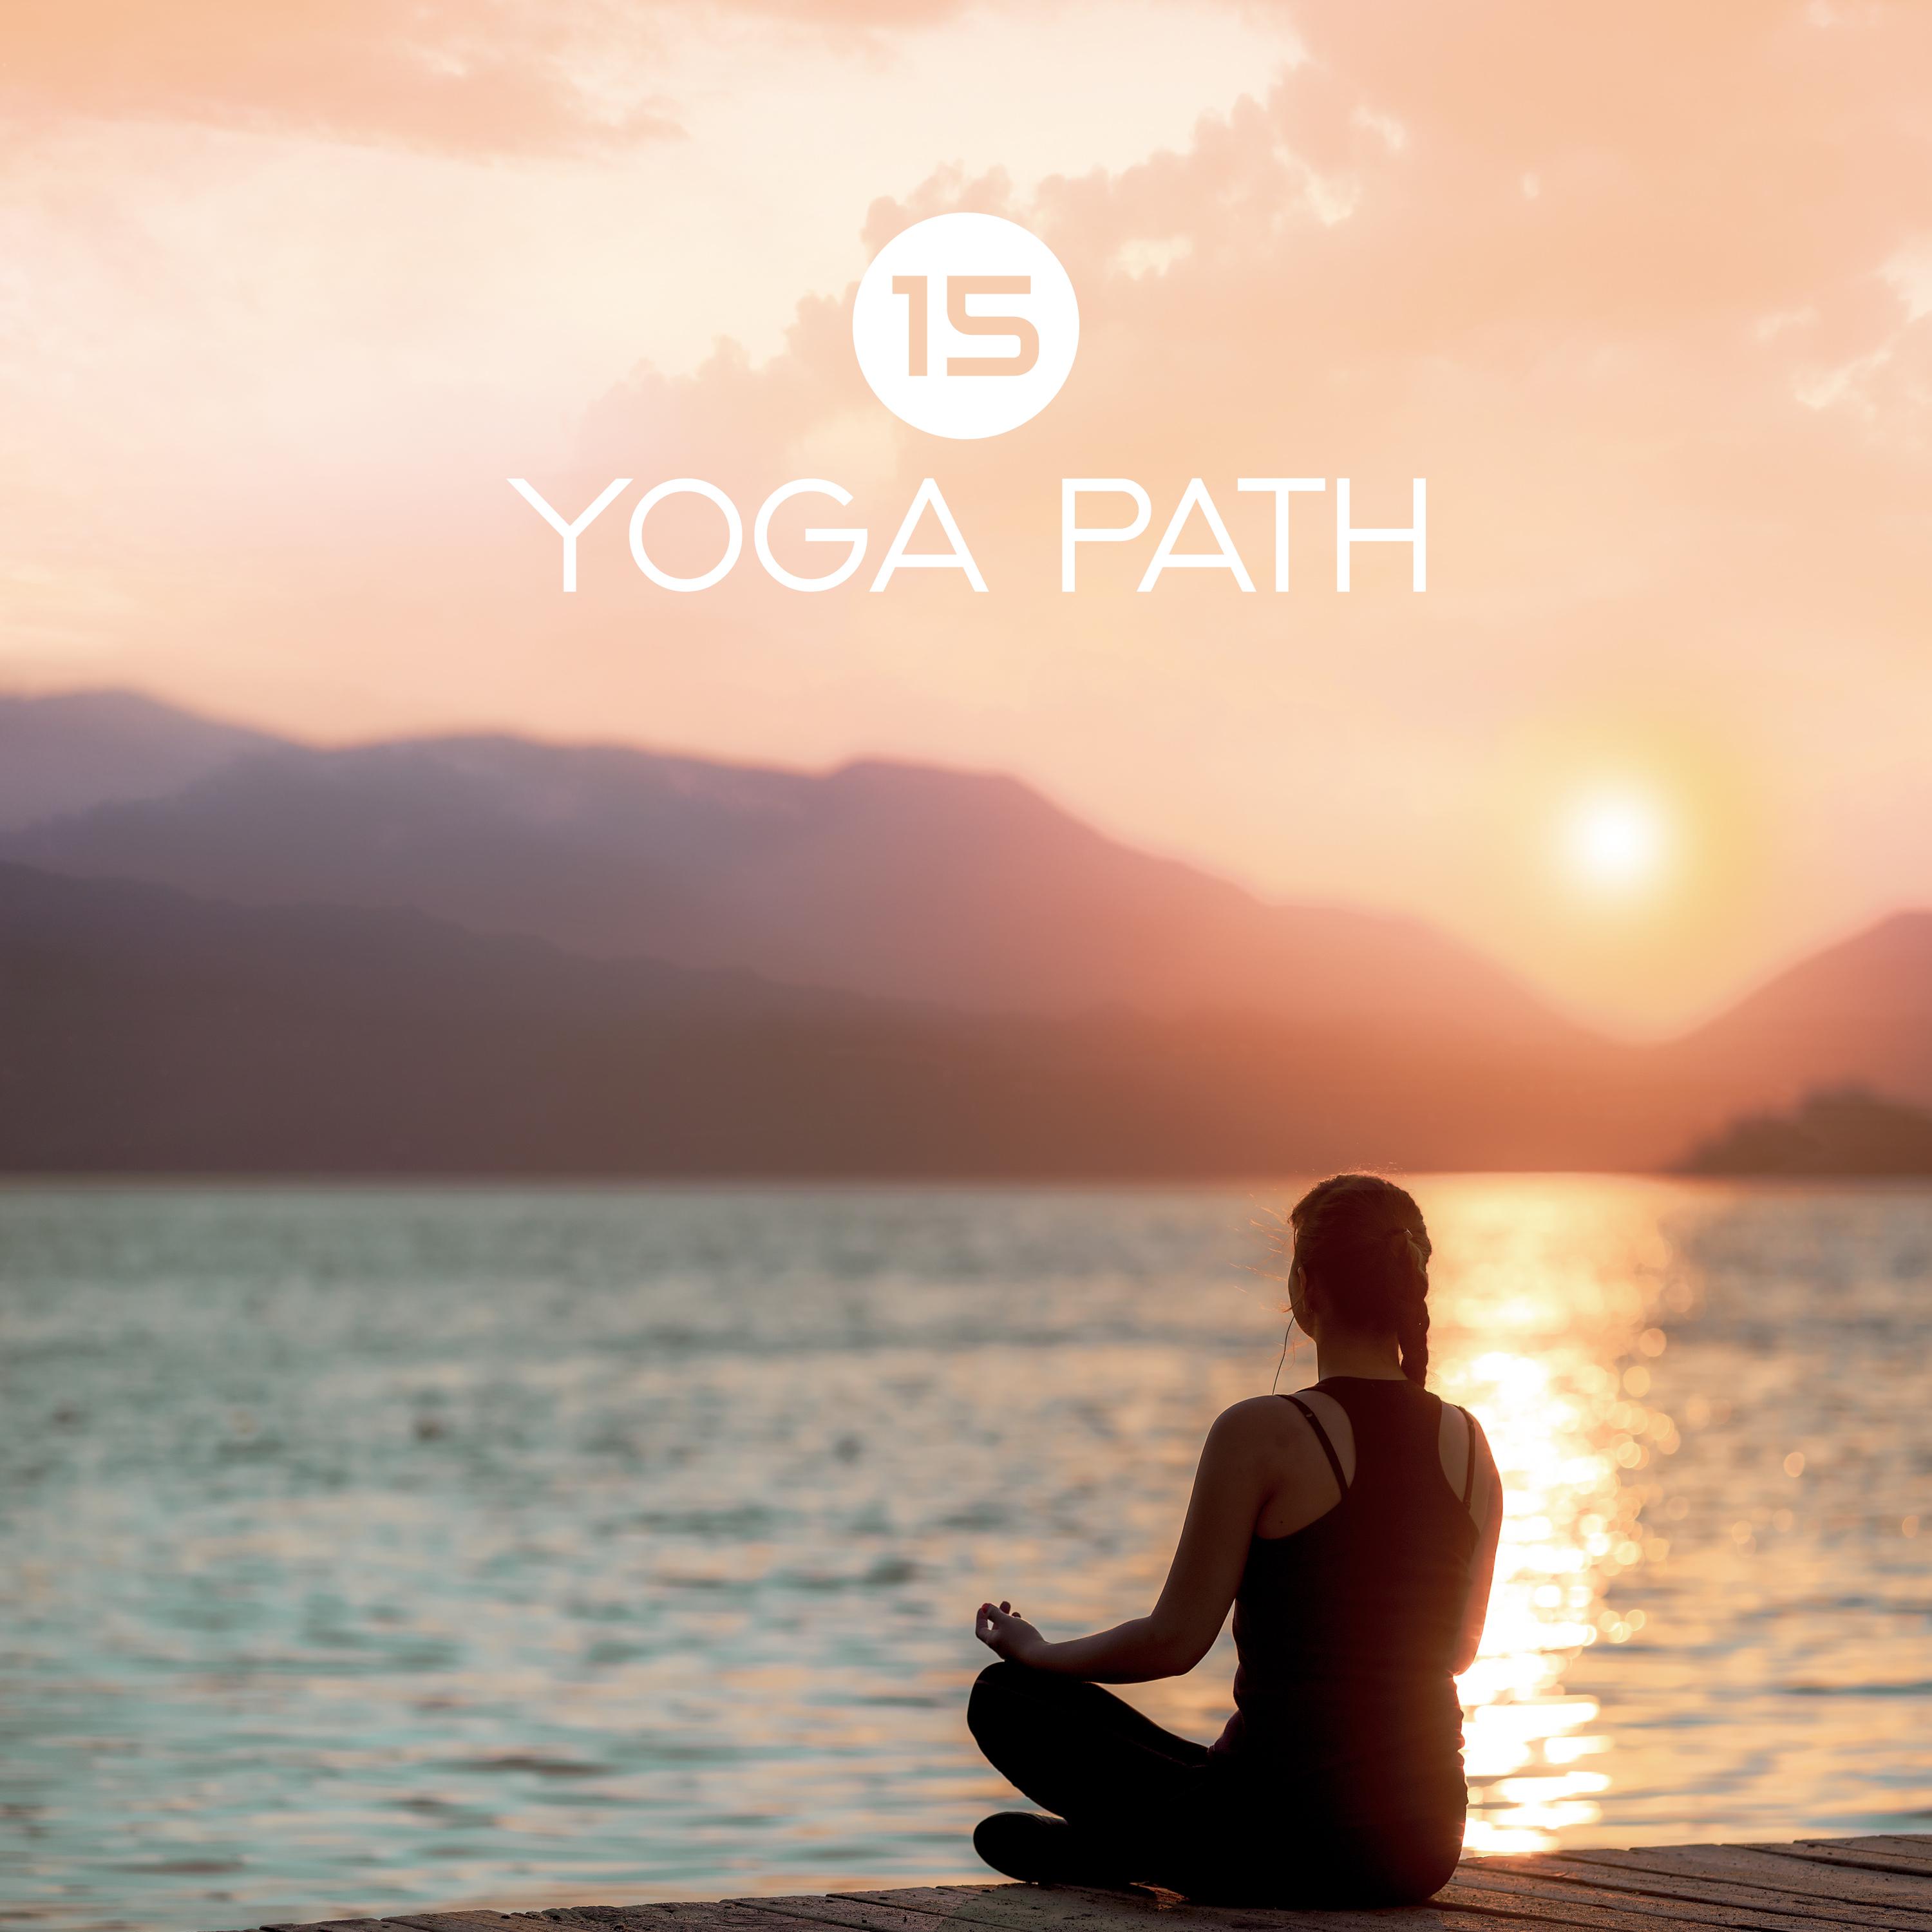 15 Yoga Path (Meditation & Relaxation, Healing Chakra, Mantra, Reiki, Spiritual Journey)